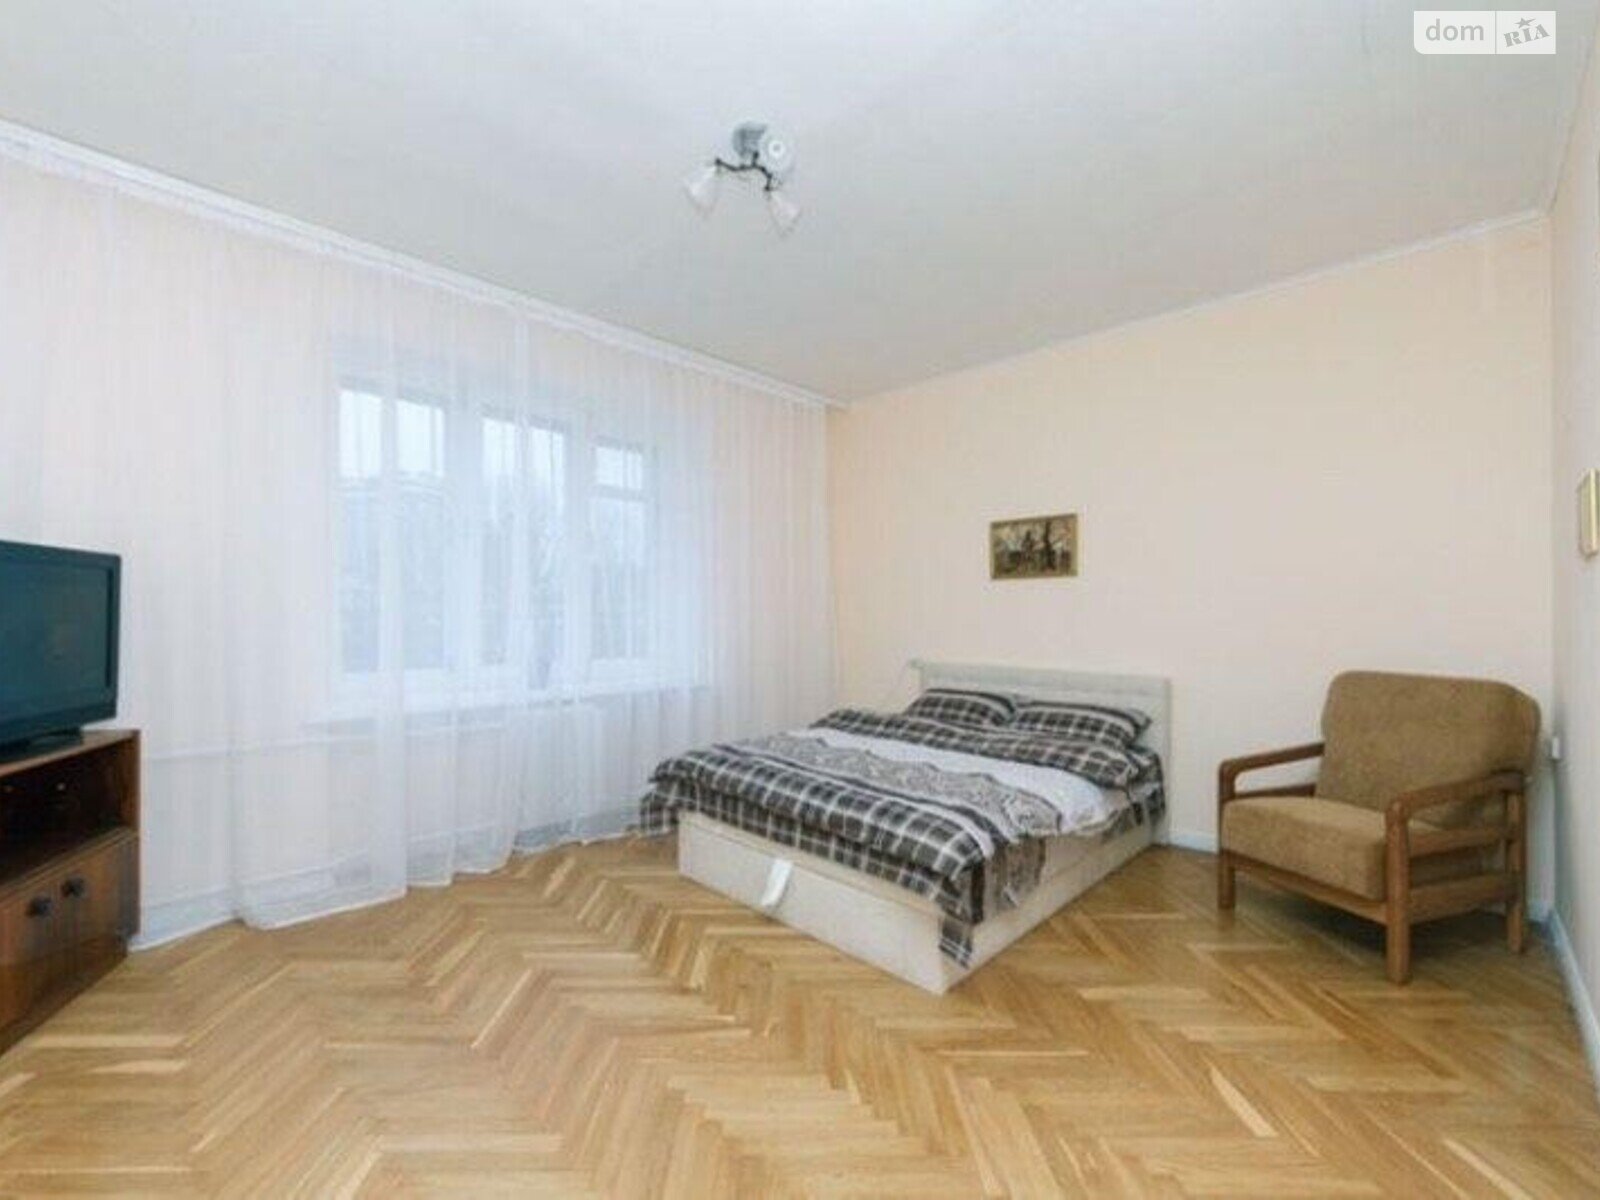 Продажа трехкомнатной квартиры в Киеве, на бул. Леси Украинки 24, район Черепанова гора фото 1